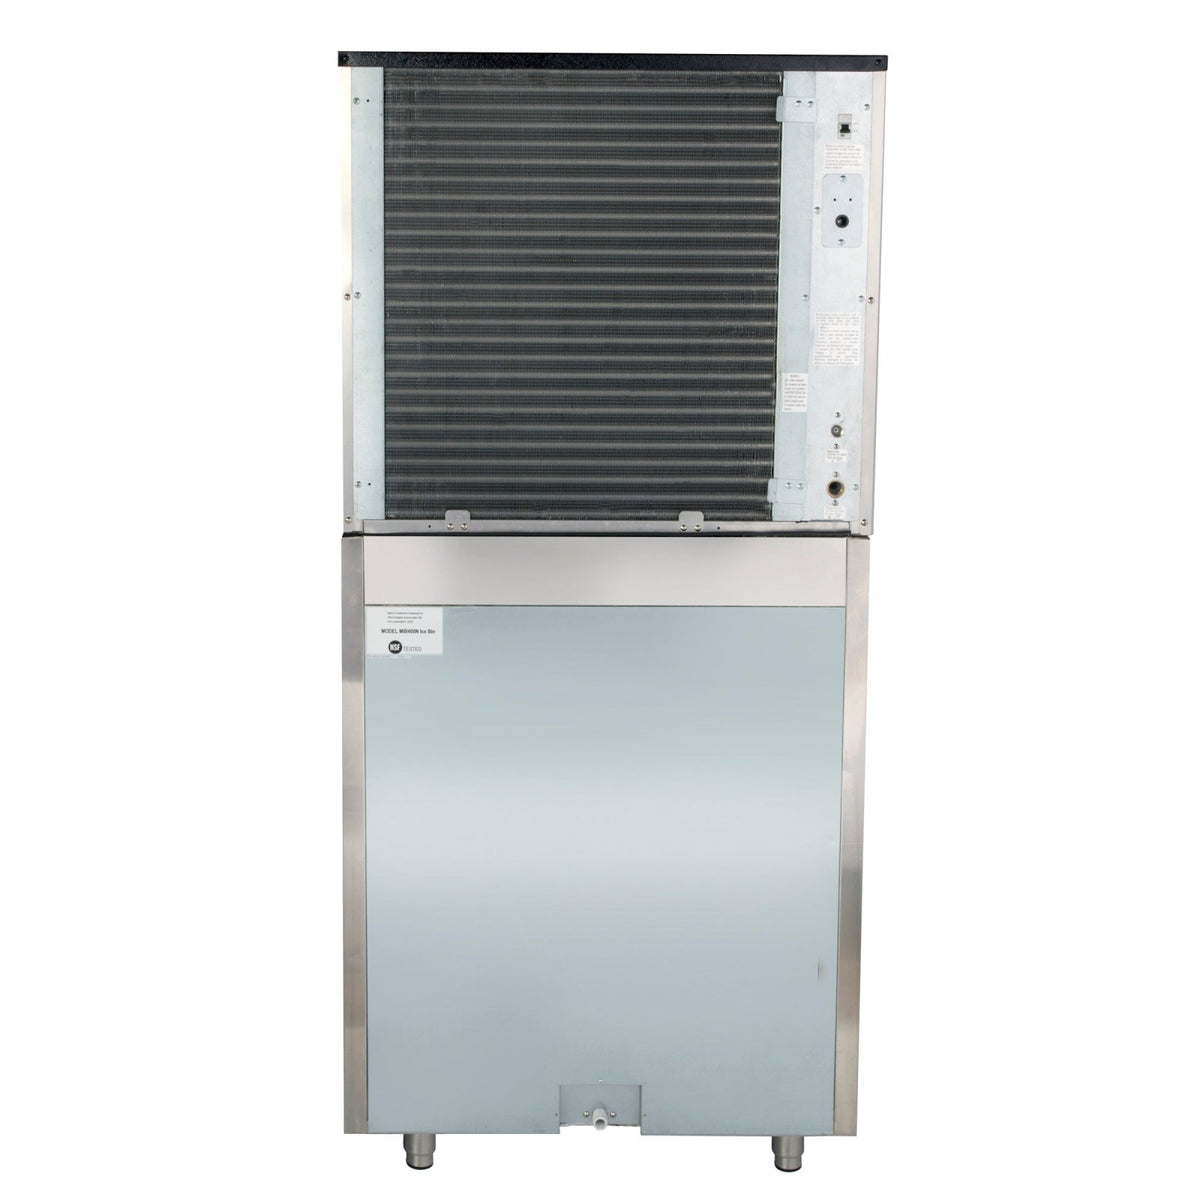 Maxx Ice MIM500N - B470 Intelligent Series Modular Ice Machine, 30"W, 521 lbs, and Storage Bin, 30"W, 470 lbs, in Stainless Steel - TheChefStore.Com